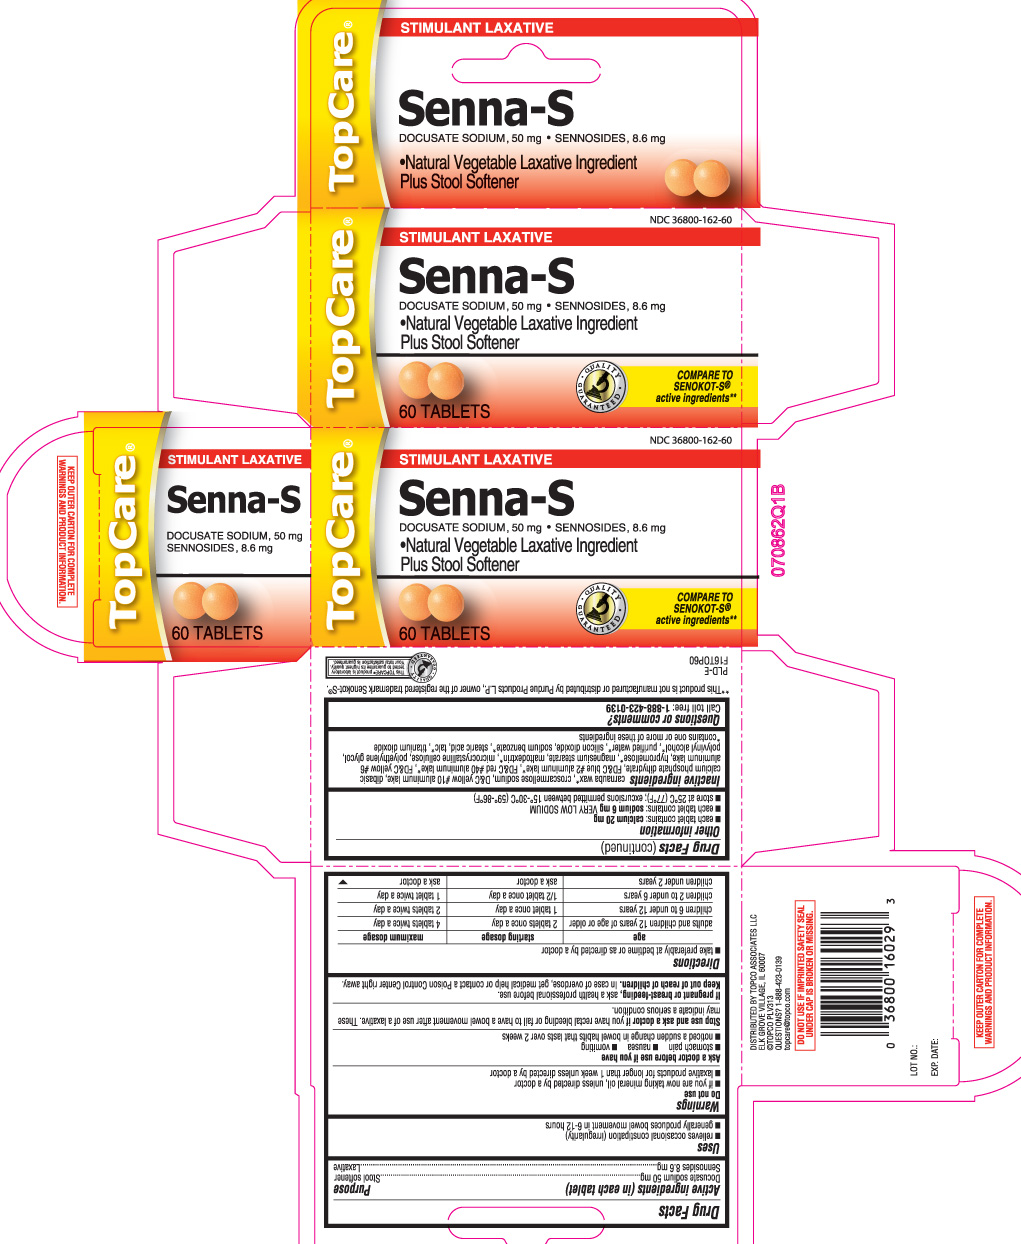 Docusate Sodium 50 mg, Sennosides, 8.6 mg